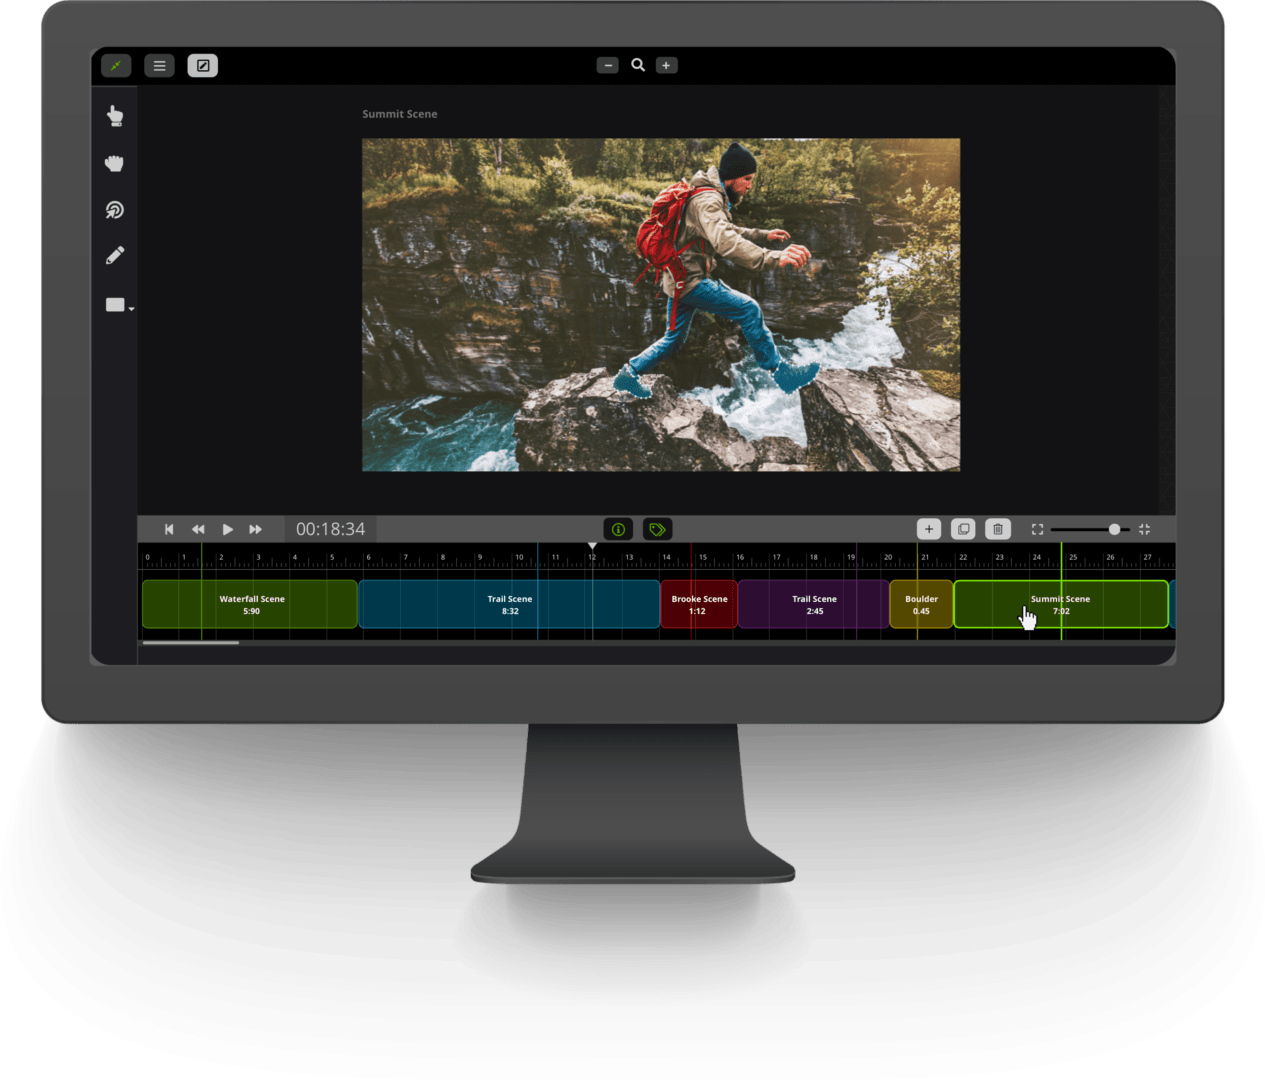 KERV interactive video platform scene selection shown on a desktop computer